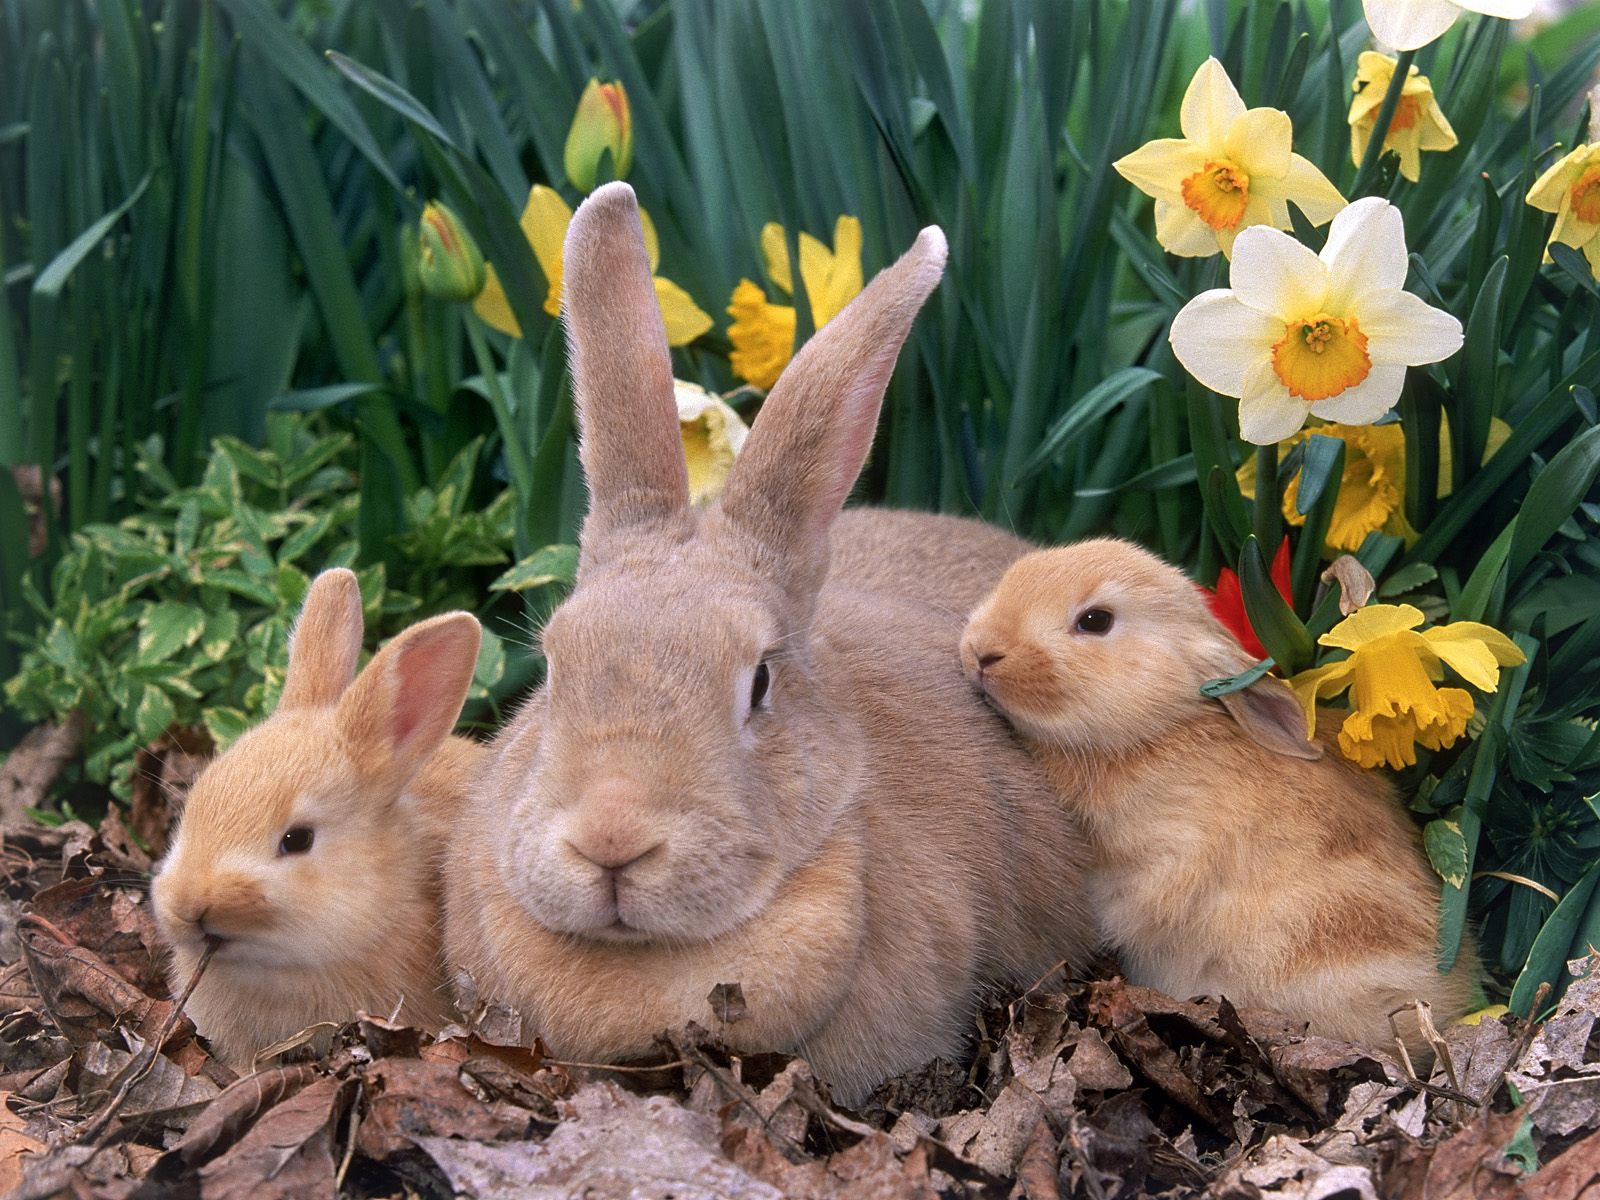 6 Cute Bunny Rabbit Easter Wallpapers For Desktop Free Afalchi Free images wallpape [afalchi.blogspot.com]